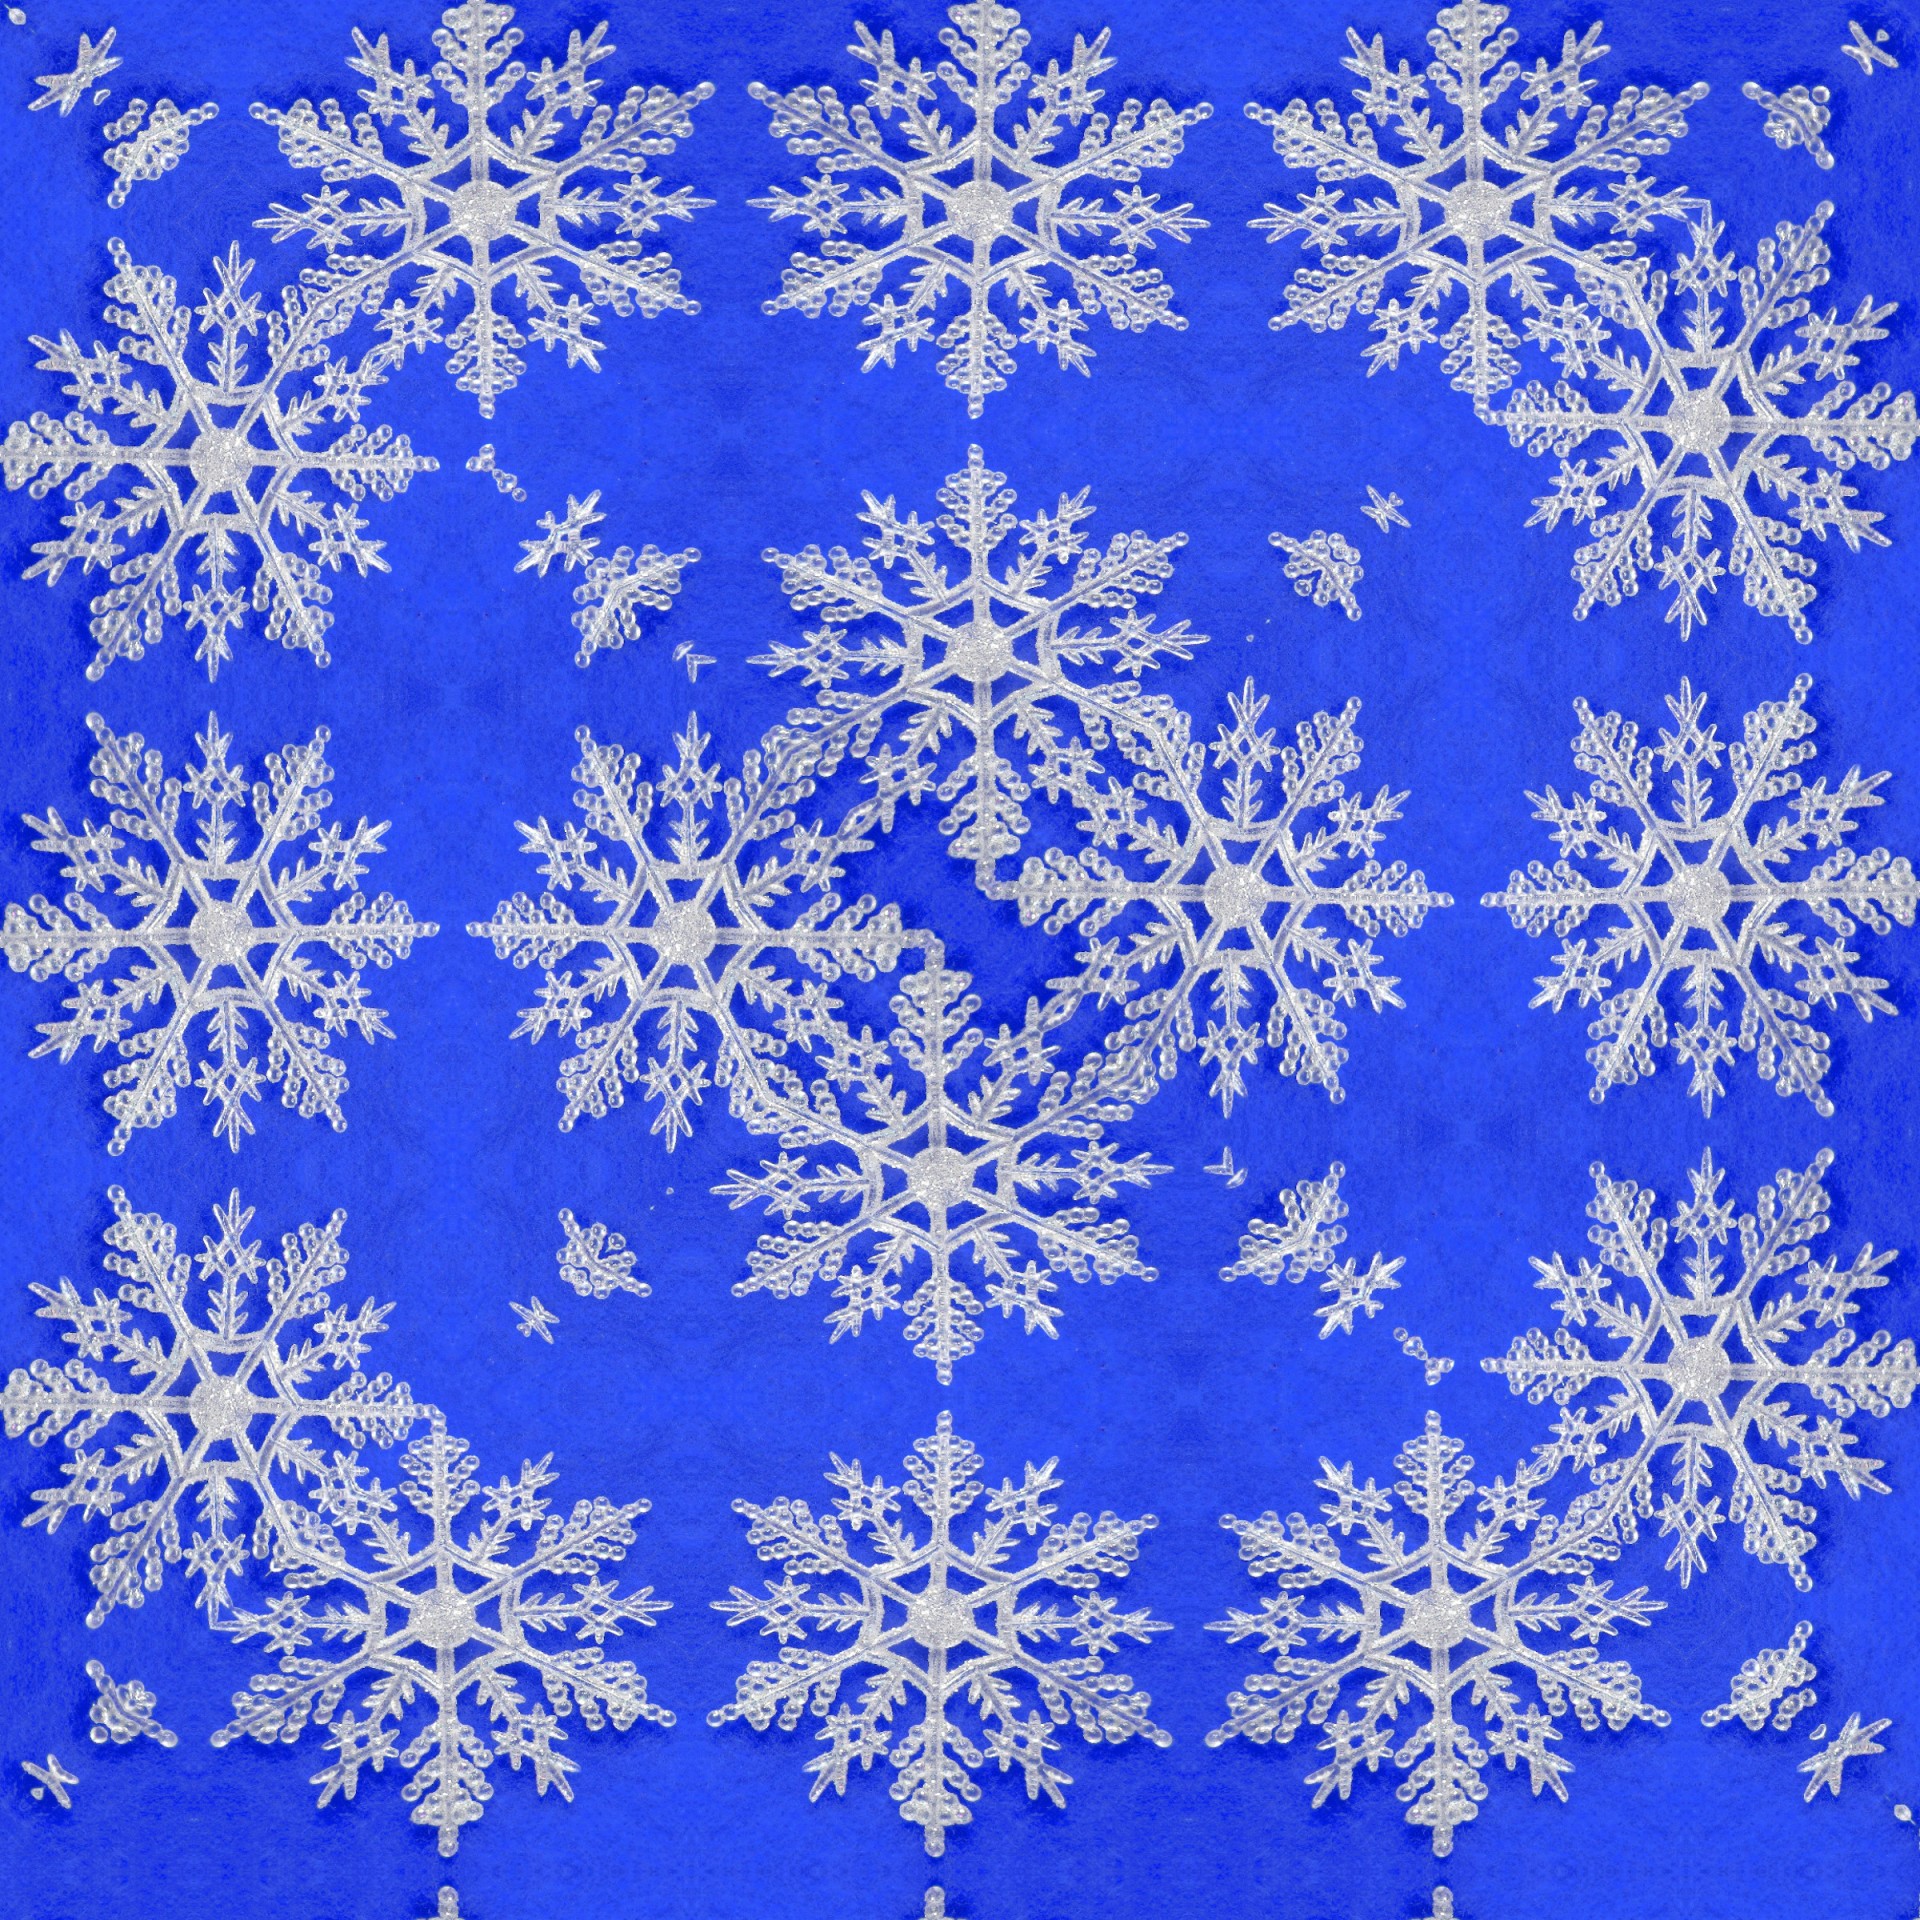 Snowflake (5)